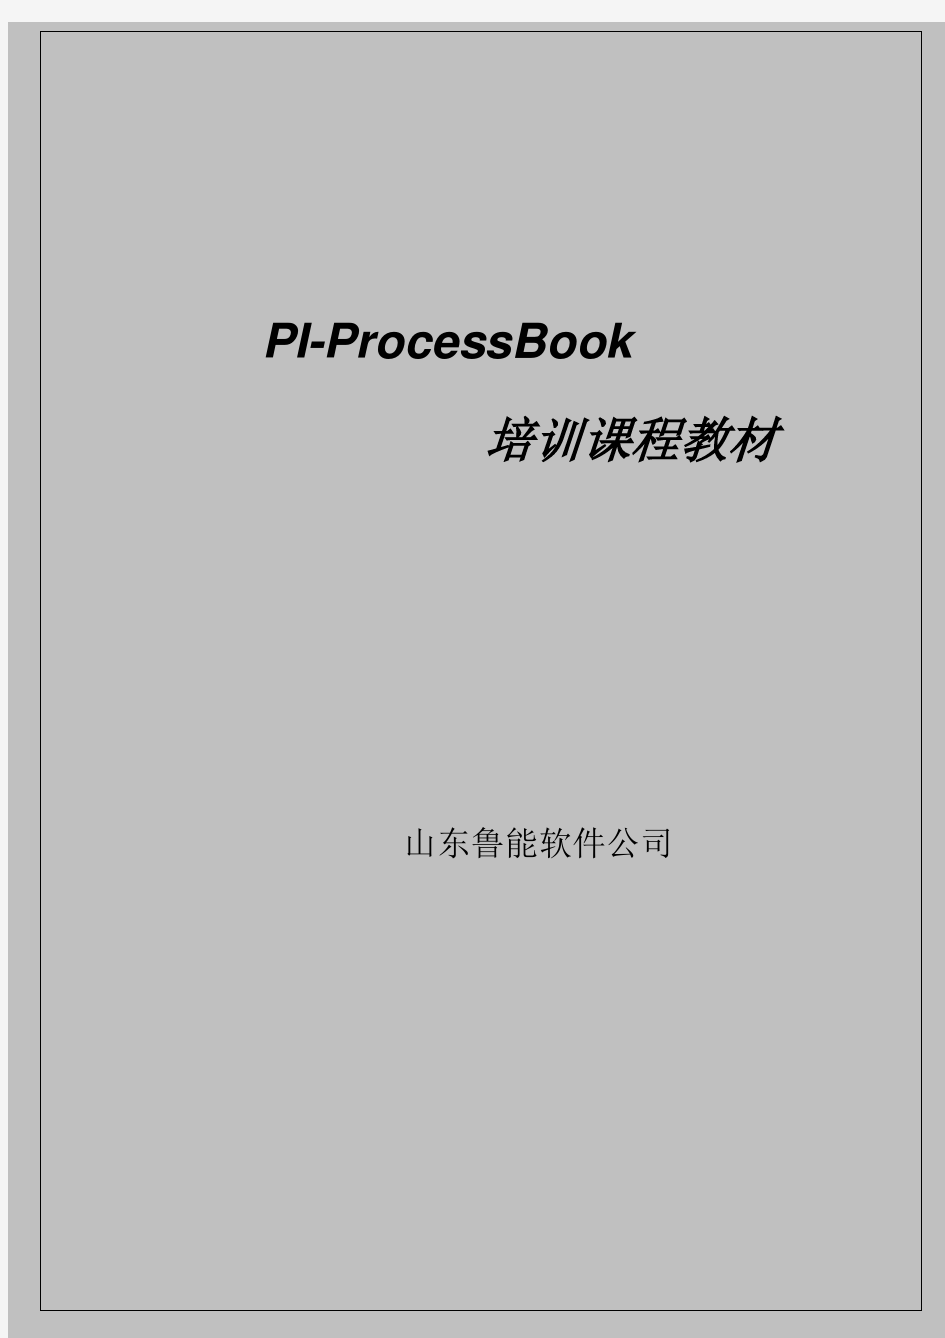 PI-ProcessBook 基础培训课程教材